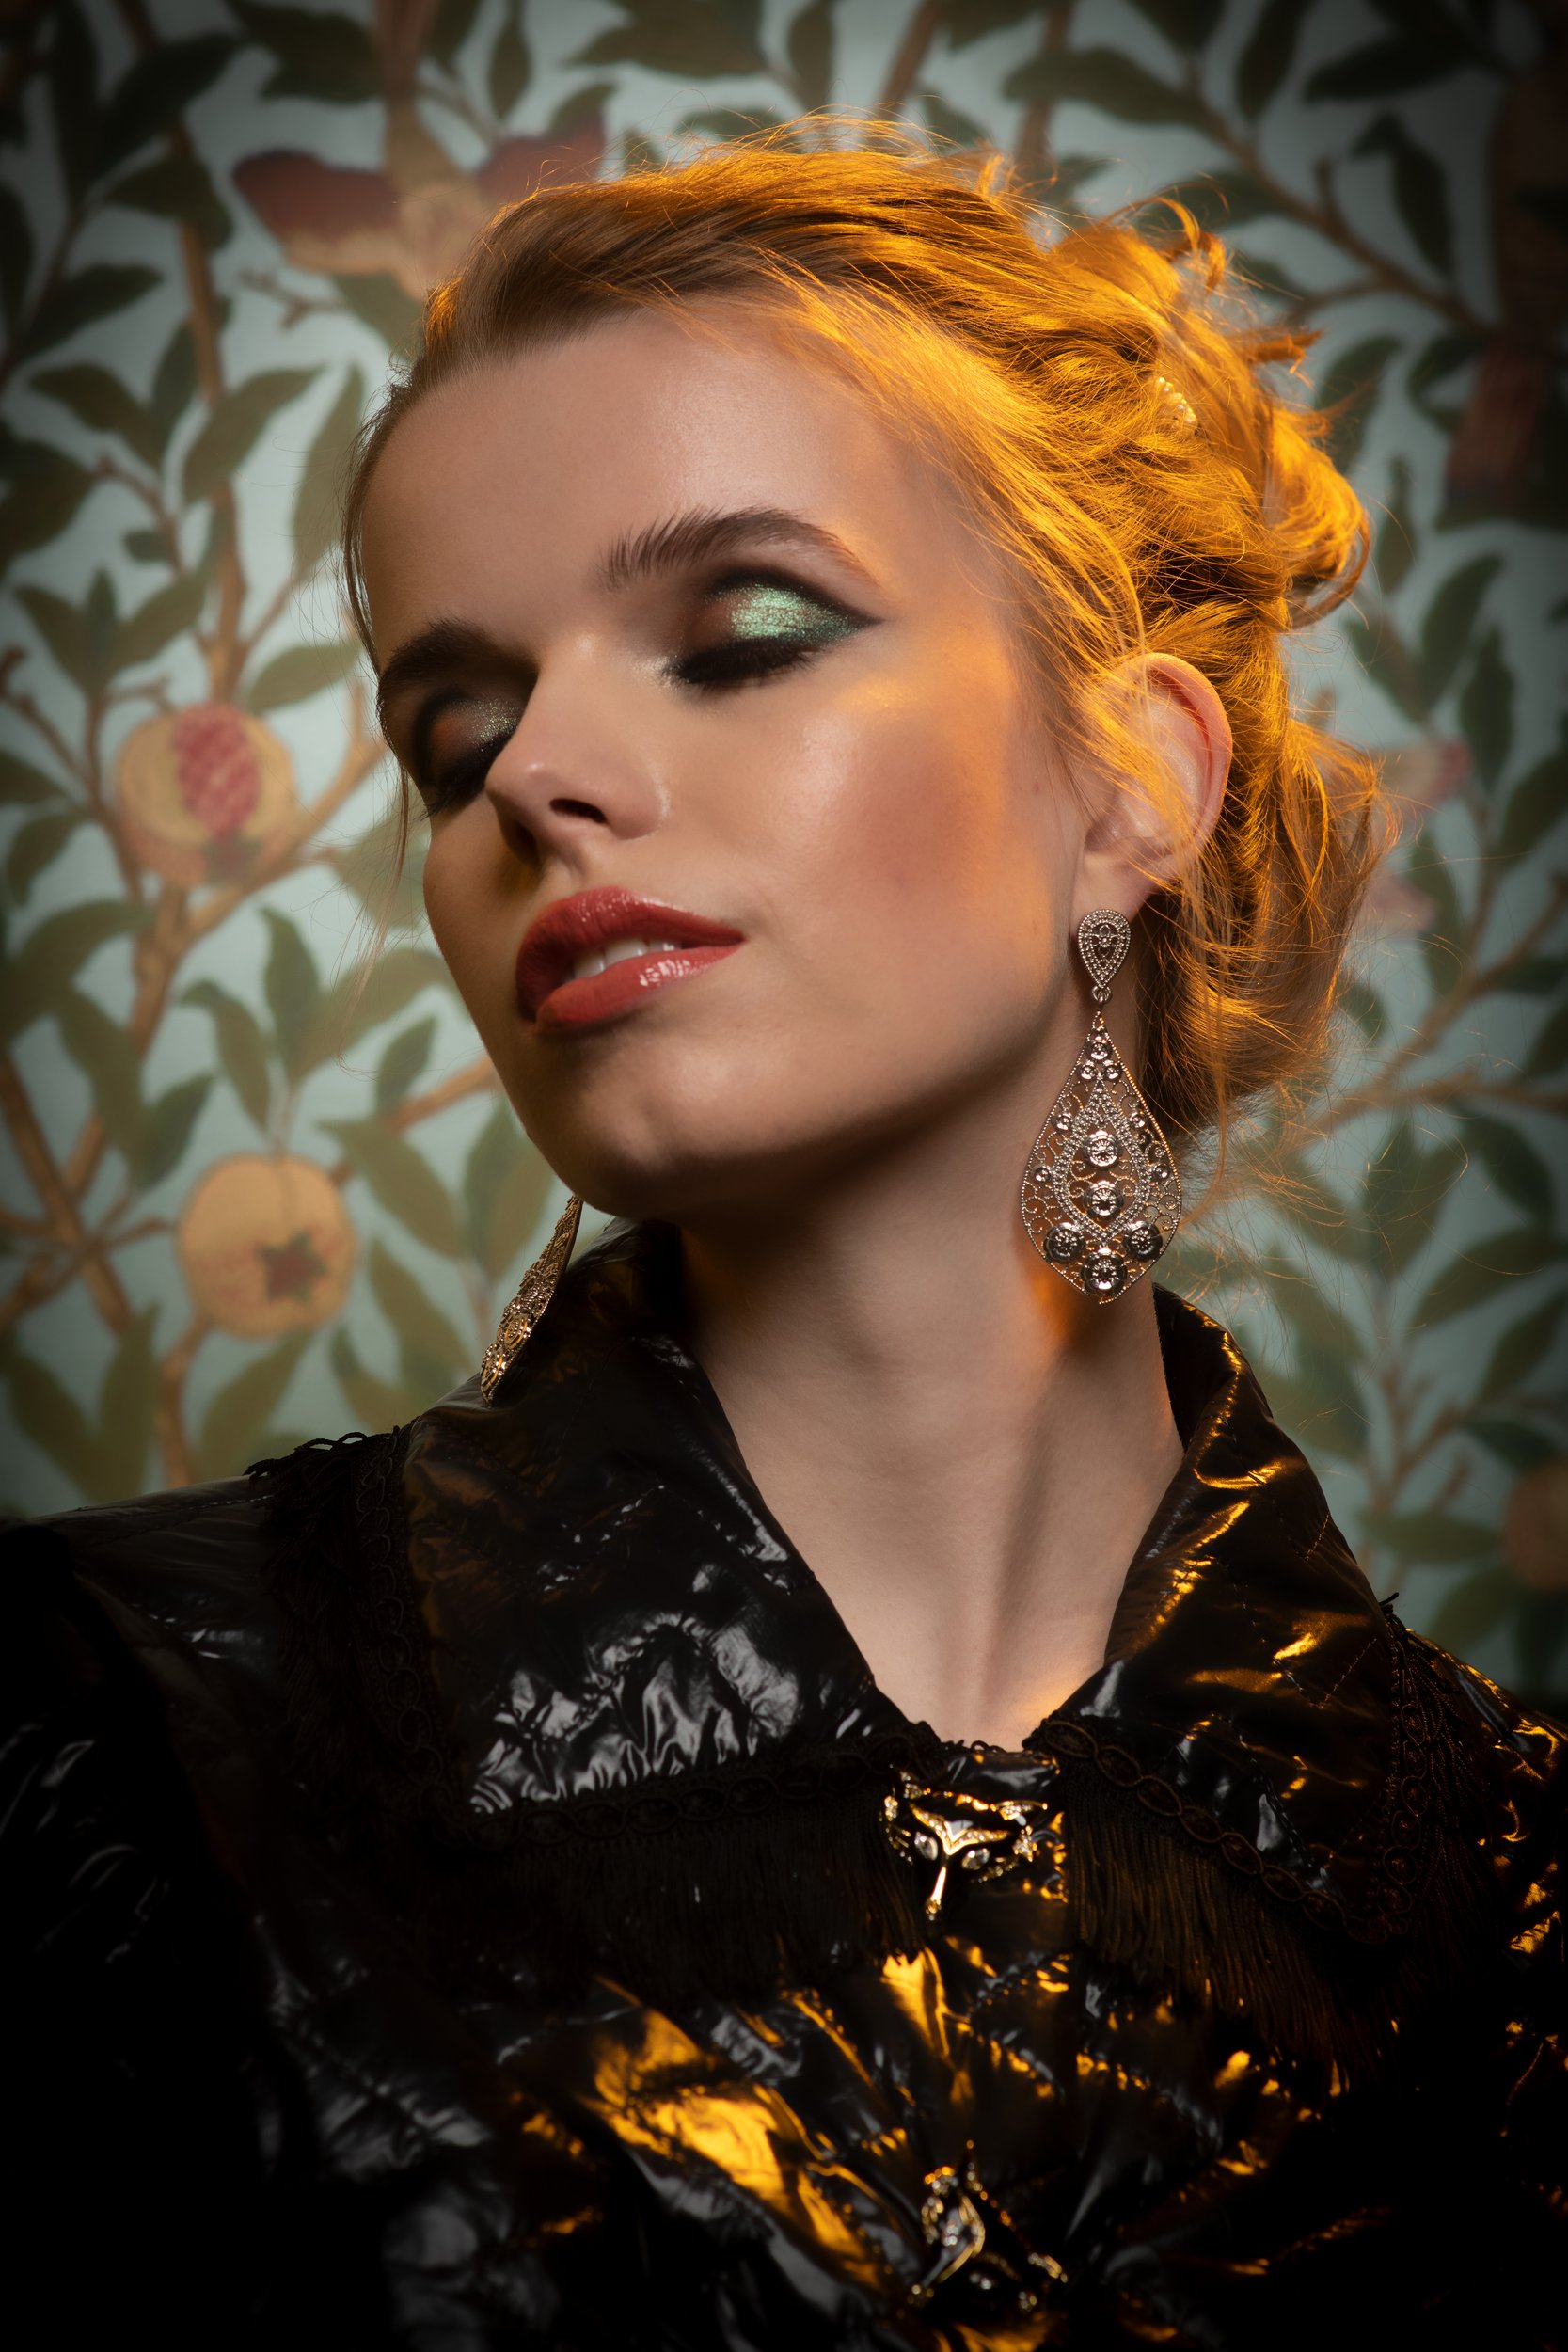 Foto: Daniel Buehler; Model: Annick R.; Agency: Scoutmodel Agency; Published: BMQ Magazin